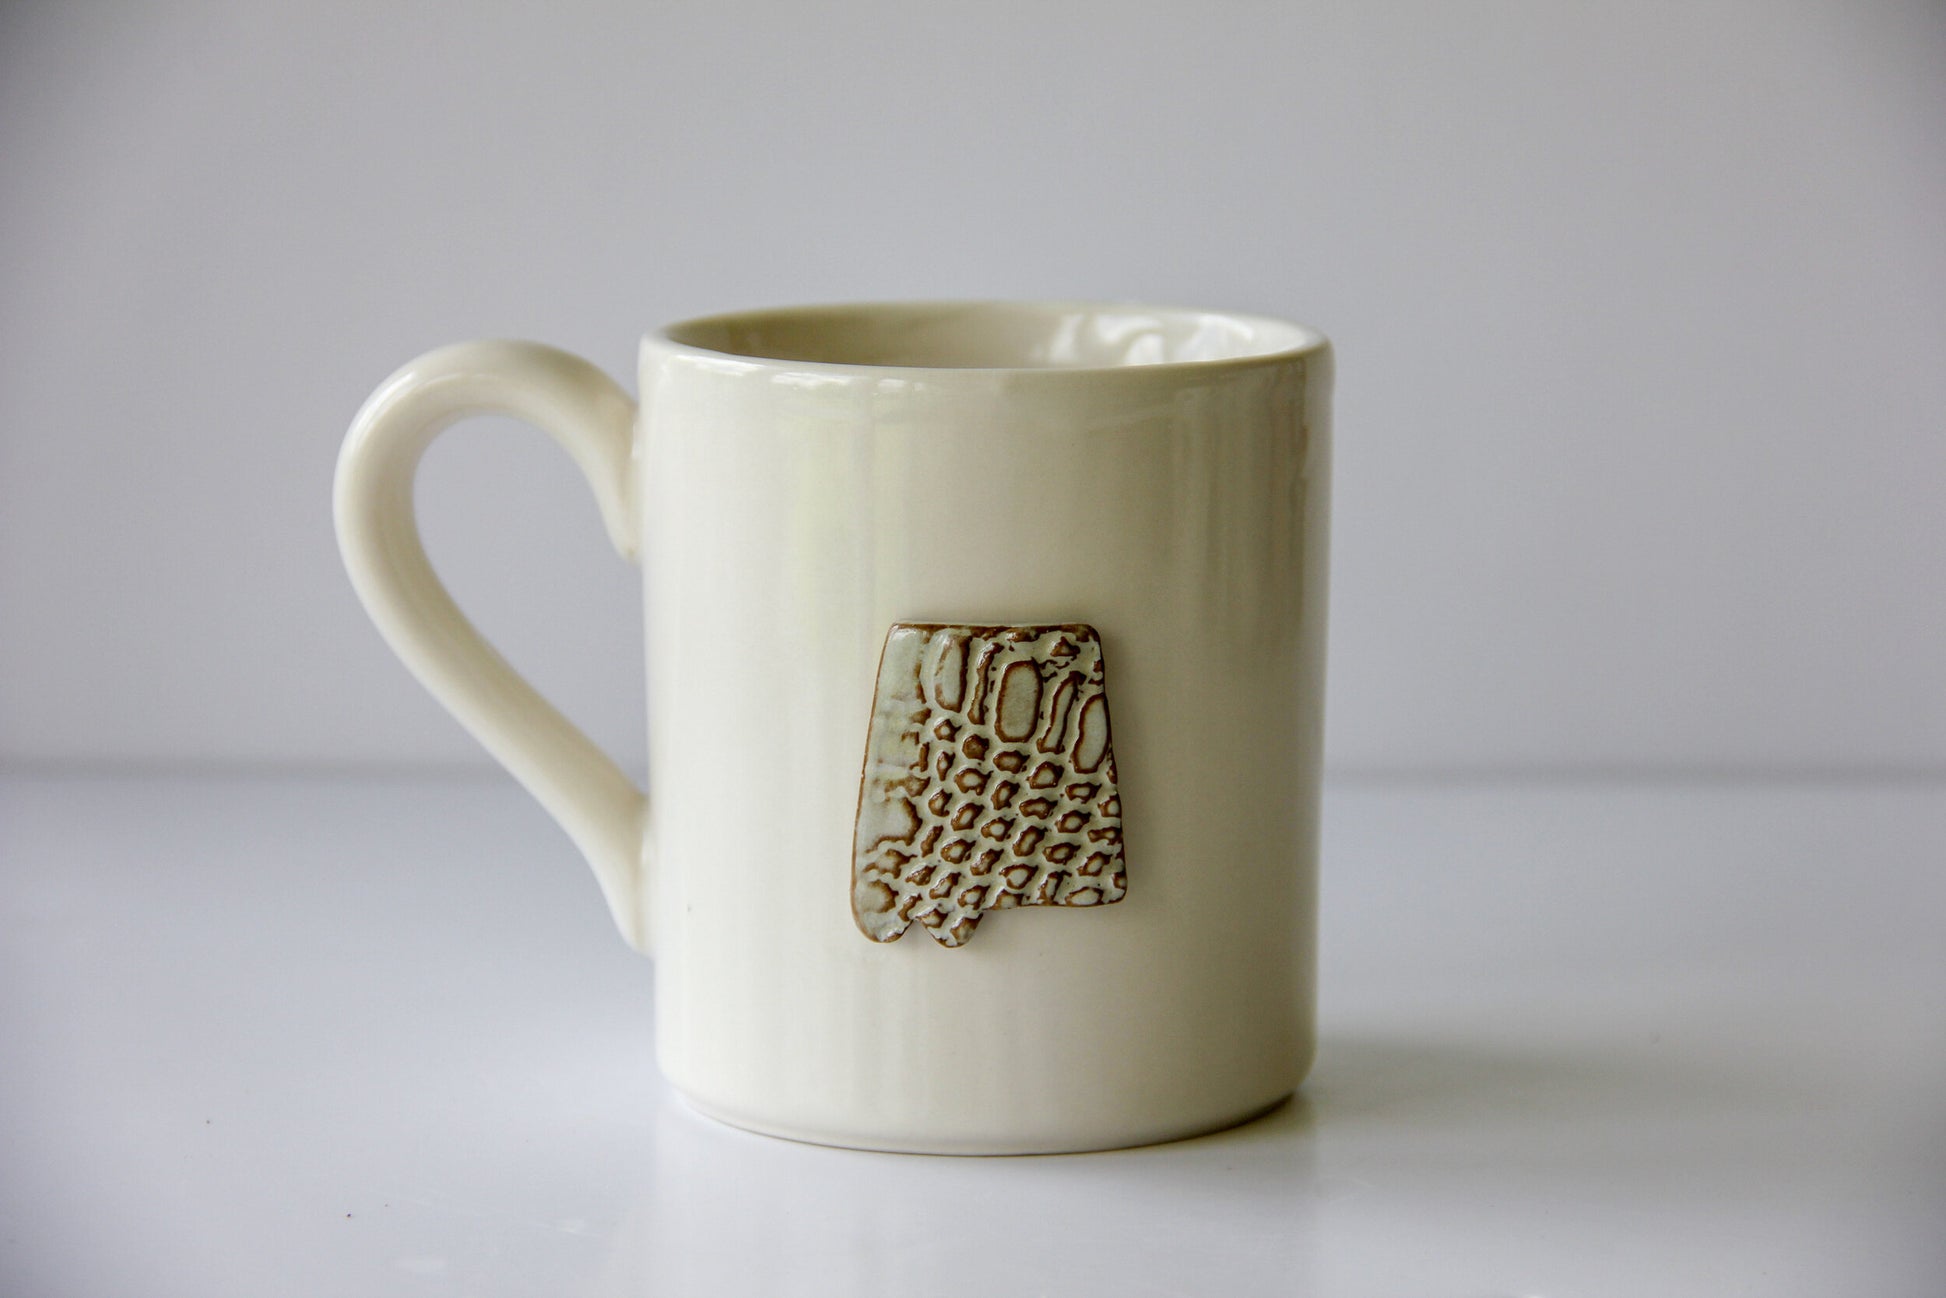 Alabama State University Proud Dad Ceramic Coffee Mug - White, 1 unit -  Kroger